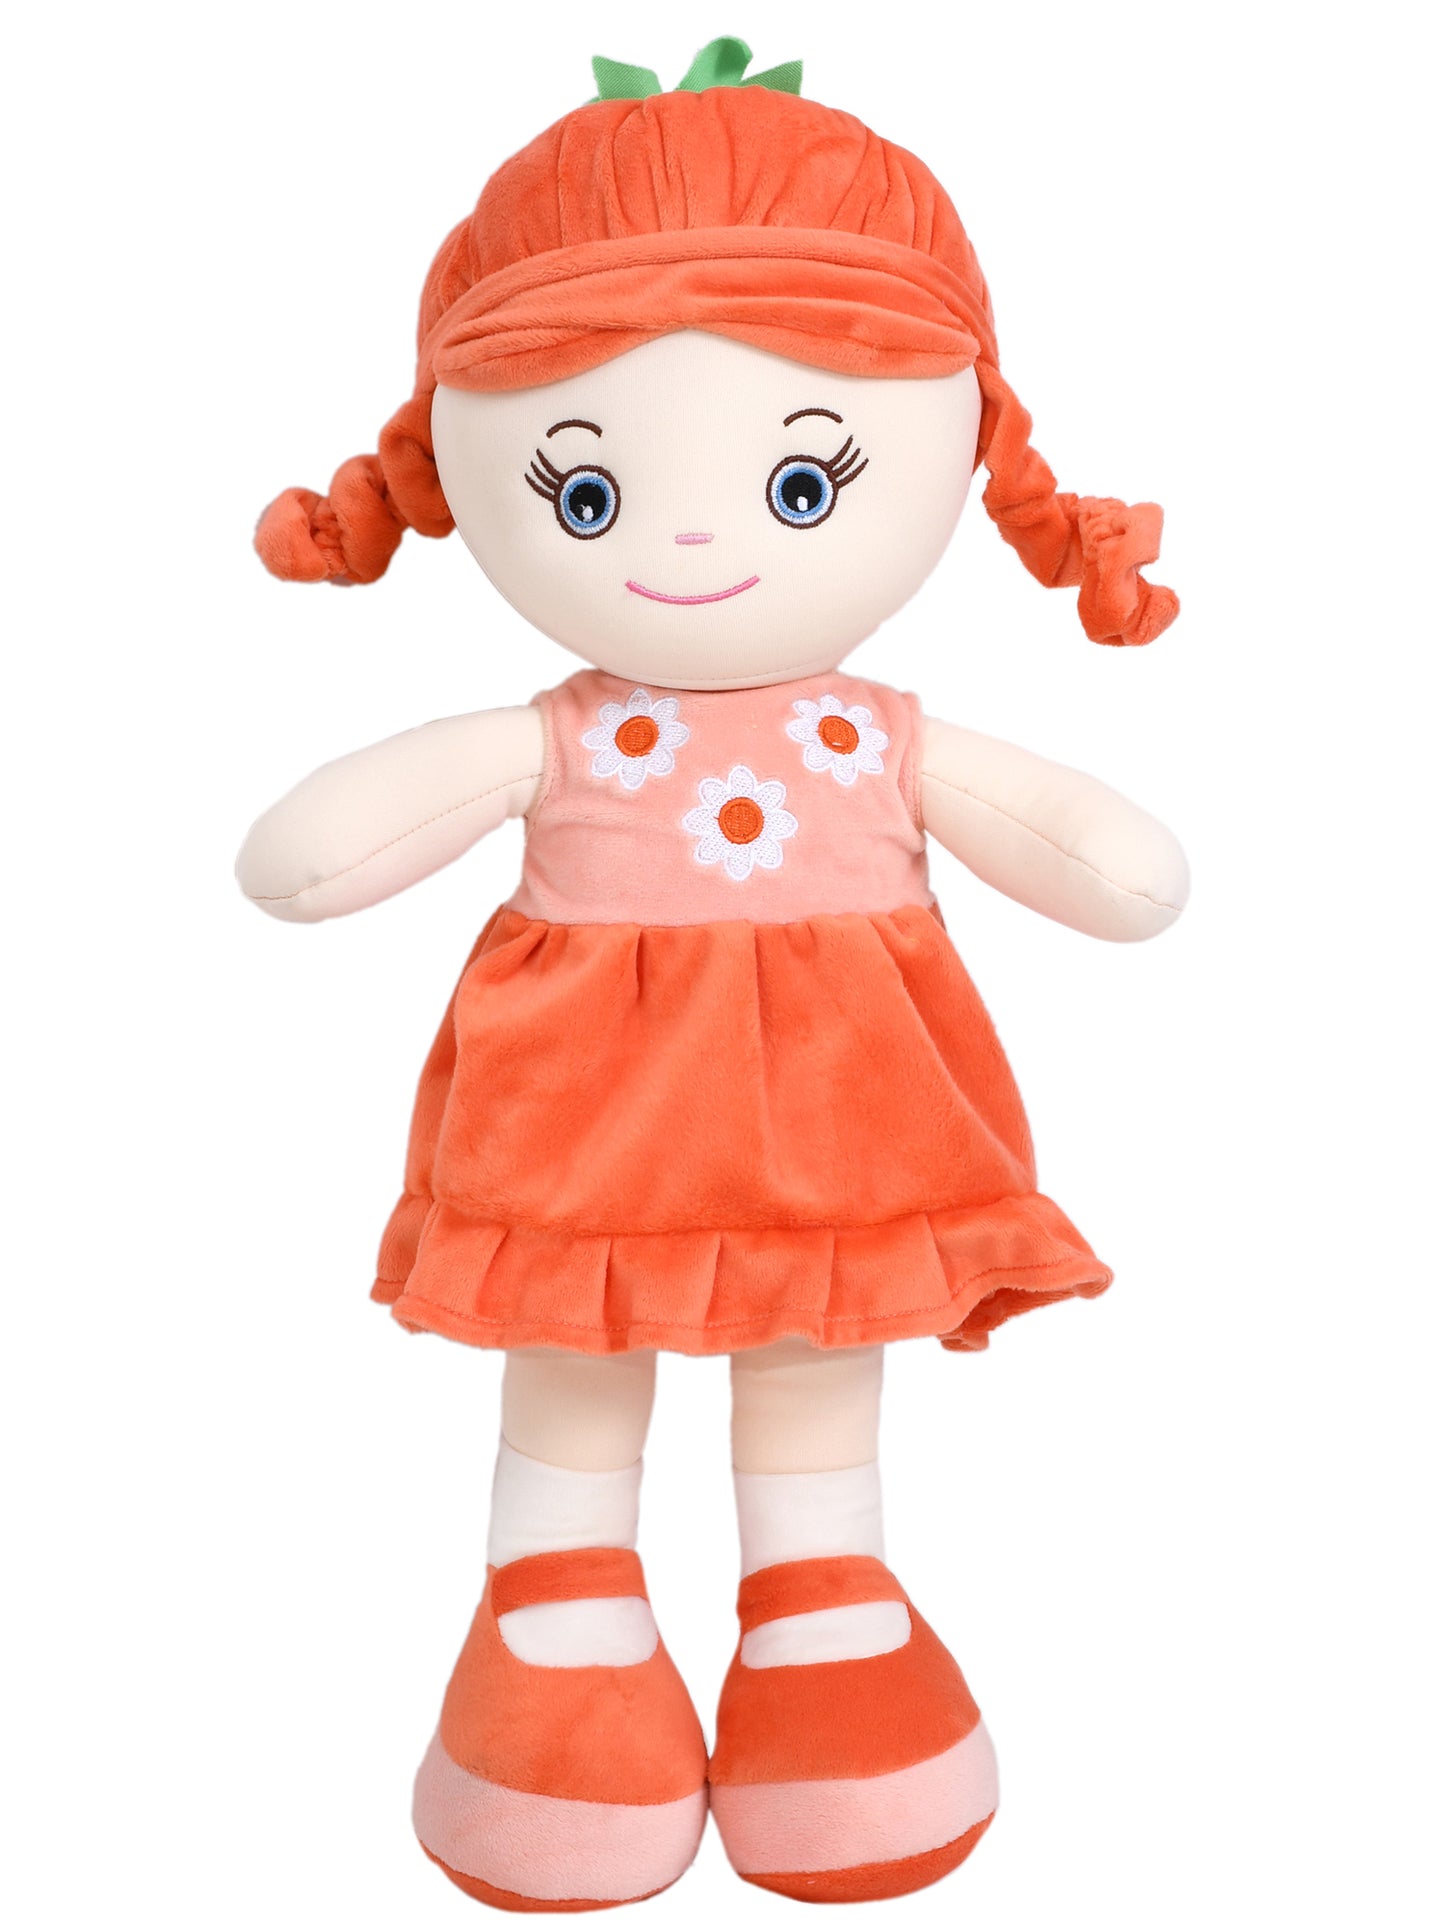 Mirada Warm Red Plush Stuffed Cute Huggable Heart Girl Big Doll Soft Toy - 50 cm